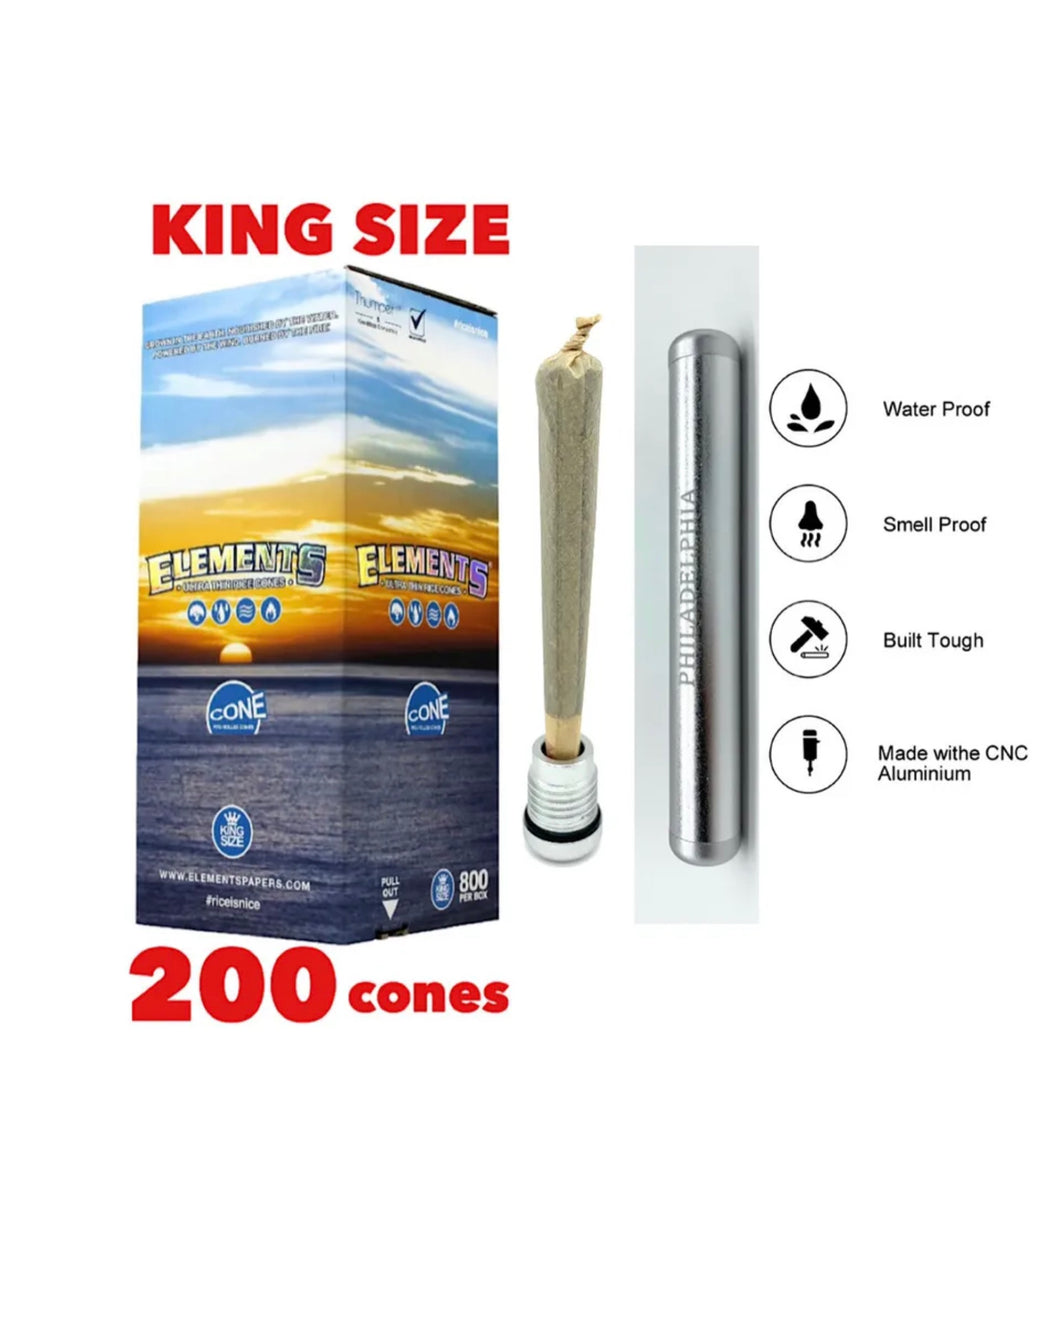 ELEMENTS organic cone king size(500pk, 300pk, 200pk, 100pk, 50pk)+ALUMINUM sealed smell water proof tube